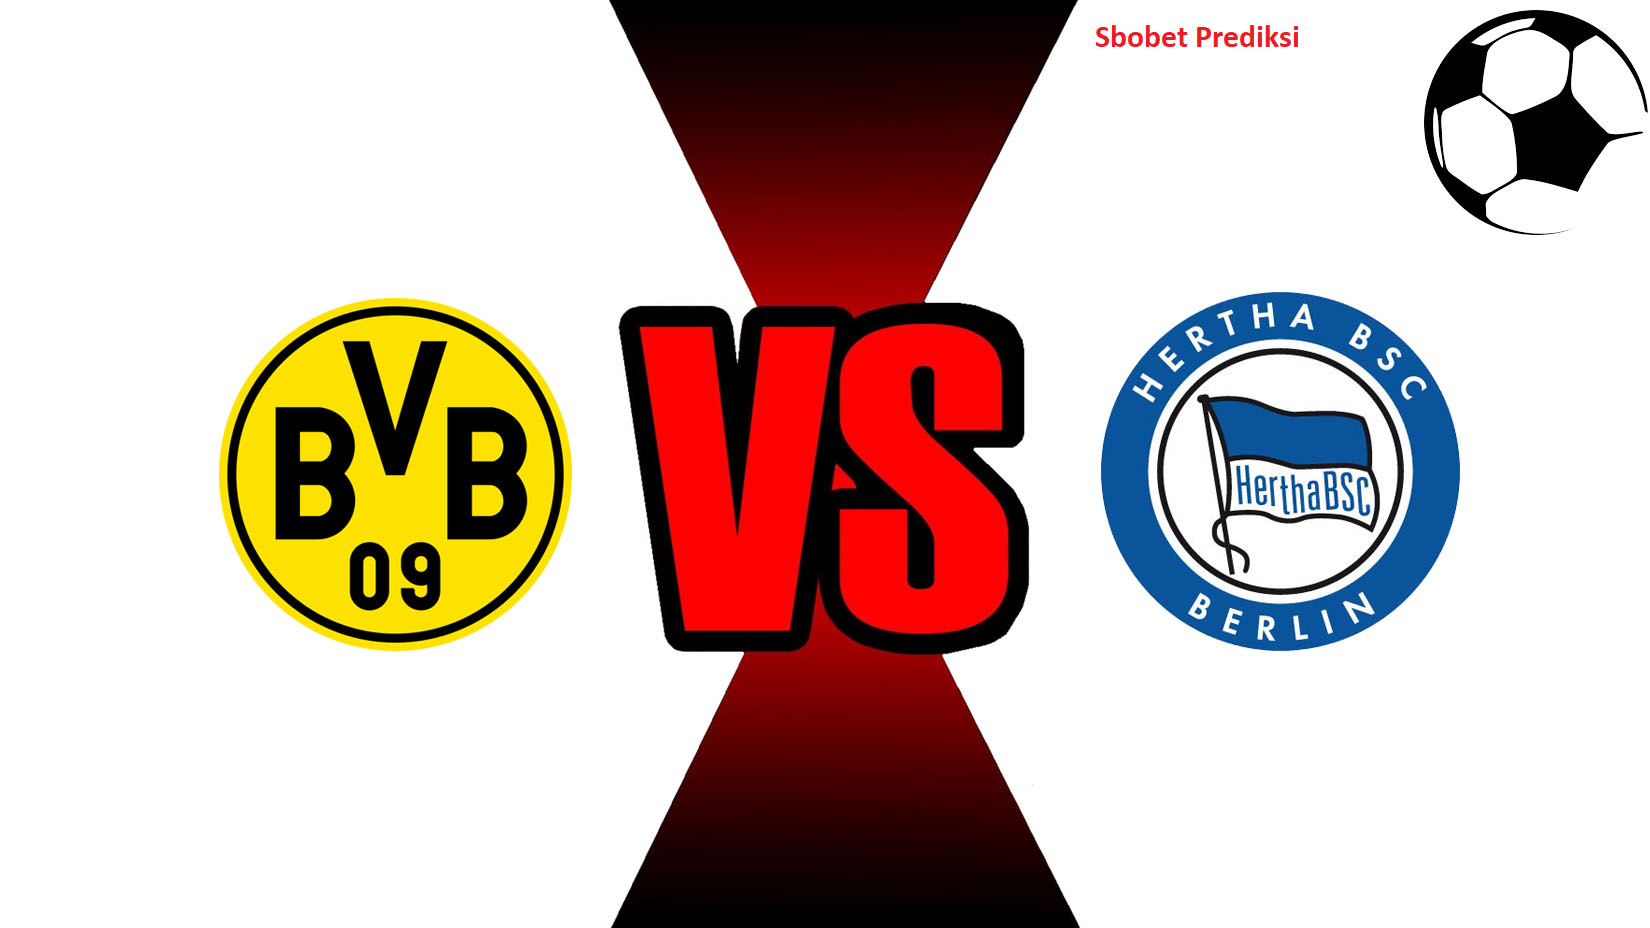 Prediksi Skor Pertandingan Dortmund vs Hertha Berlin 27 Oktober 2018